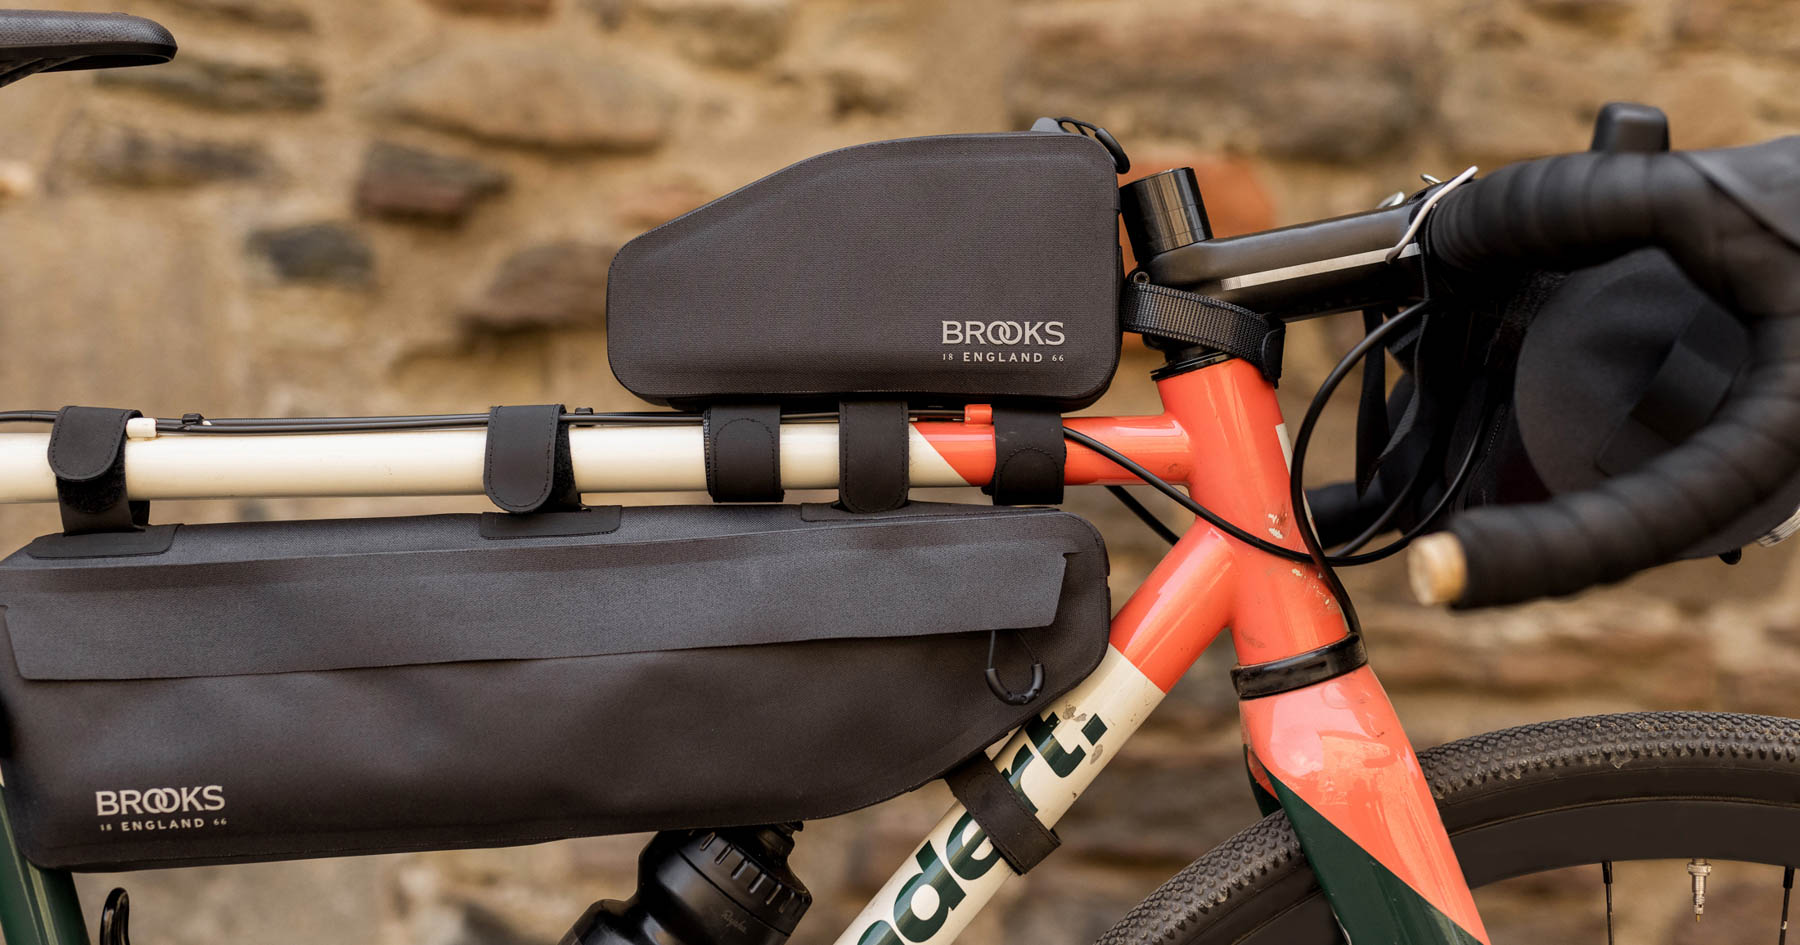 Bike handlebar bag - Brooks England - Bike Bags